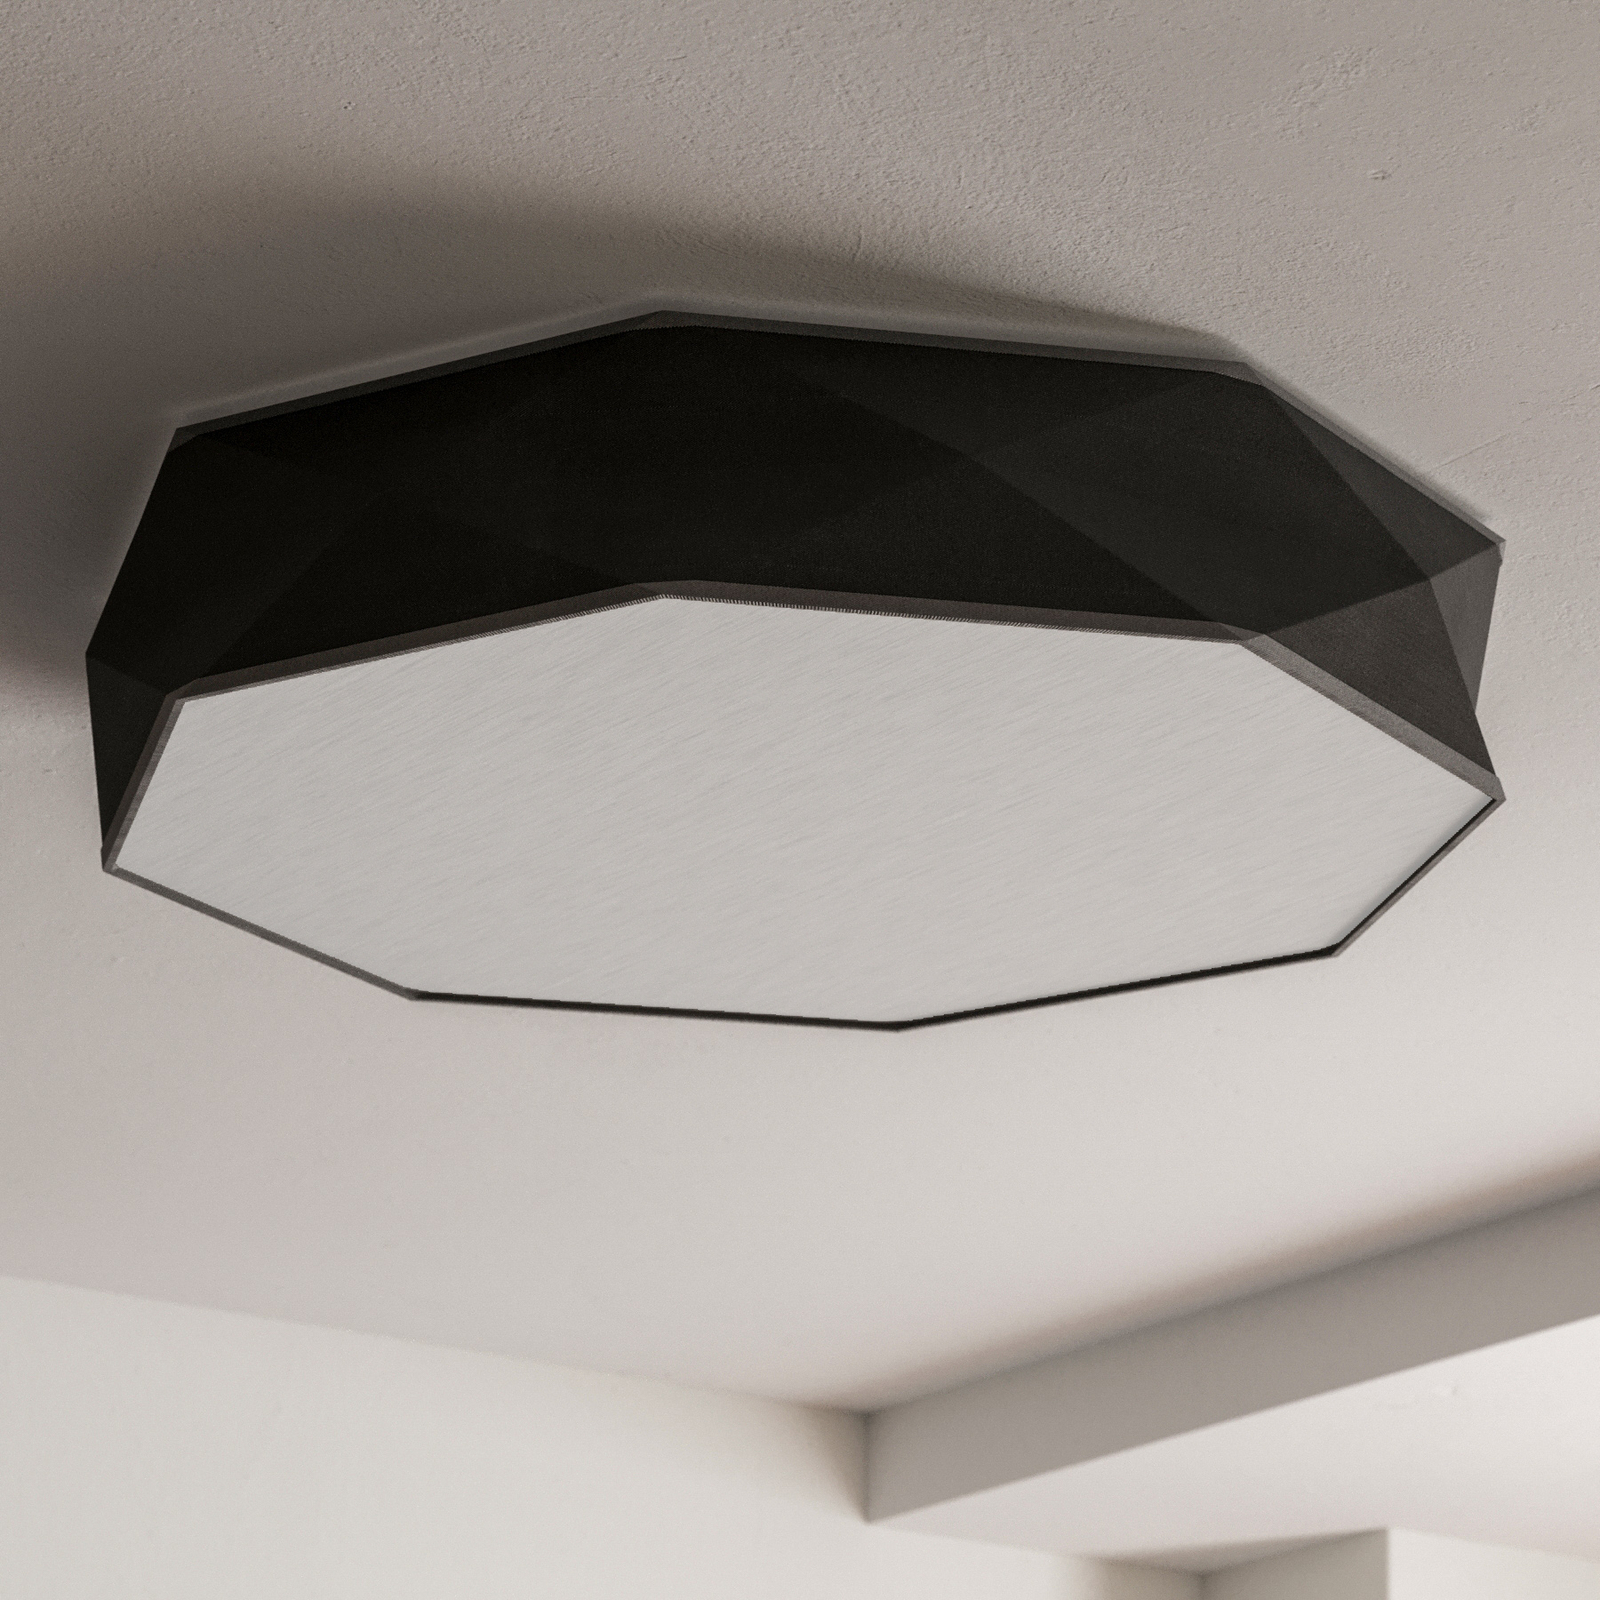 Kantoor New plafondlamp, Ø 88 cm, zwart